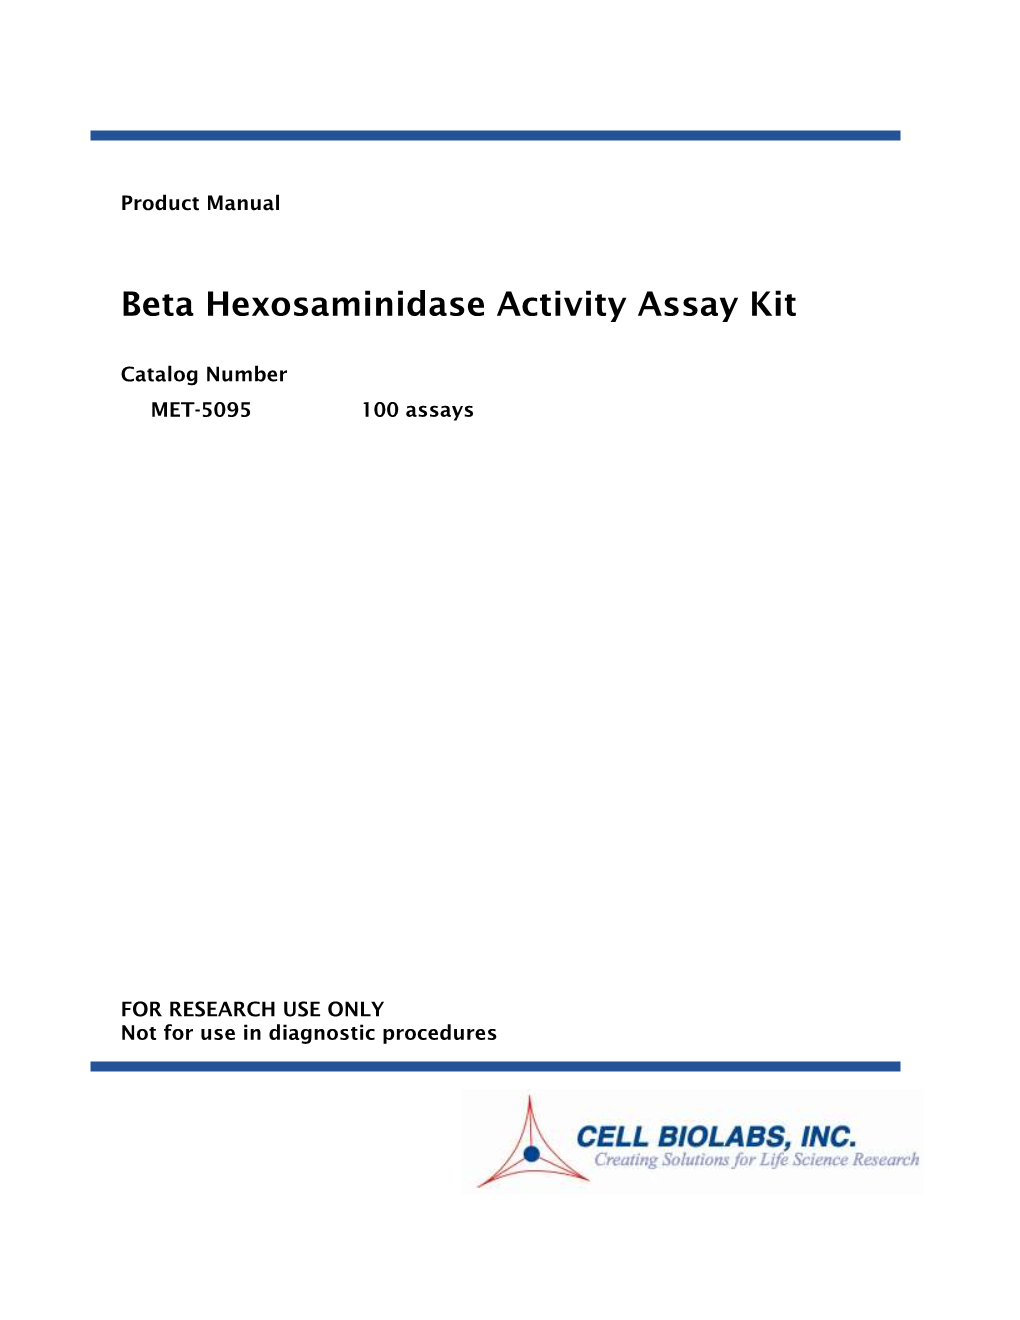 Beta Hexosaminidase Activity Assay Kit